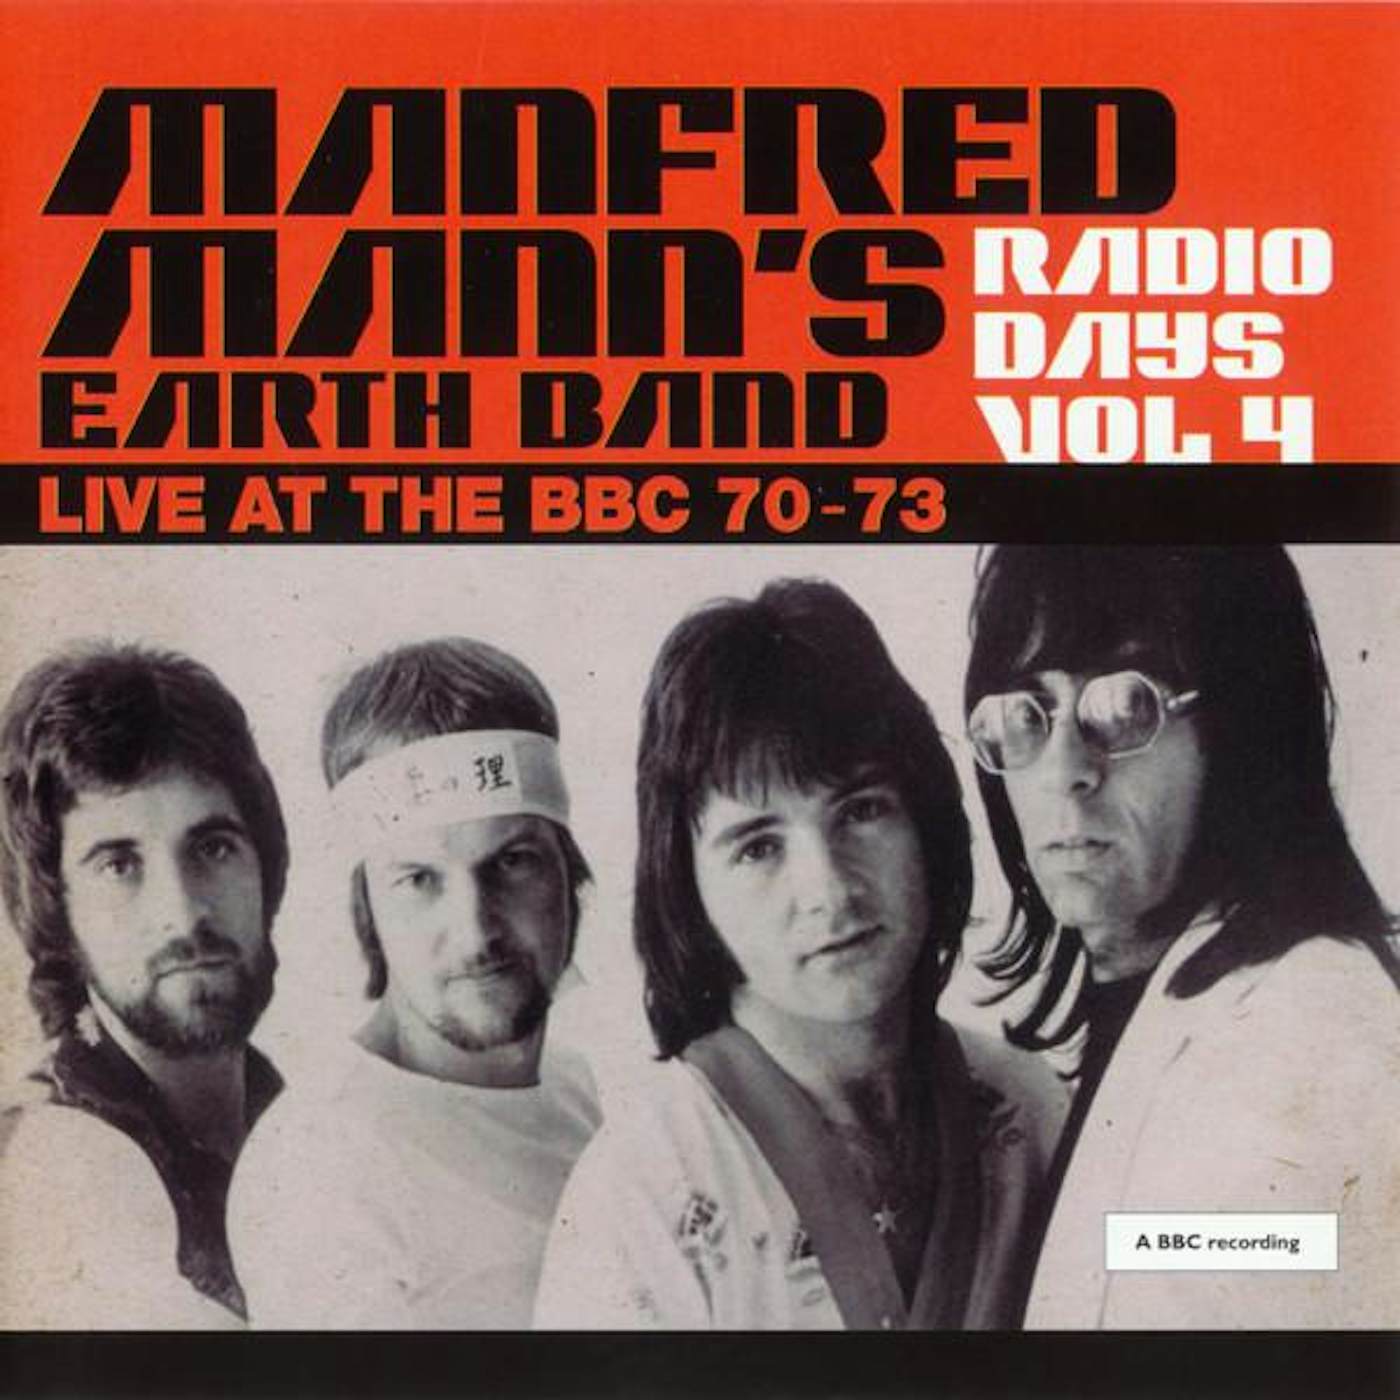 Manfred Mann's Earth Band RADIO DAYS VOL.4 CD